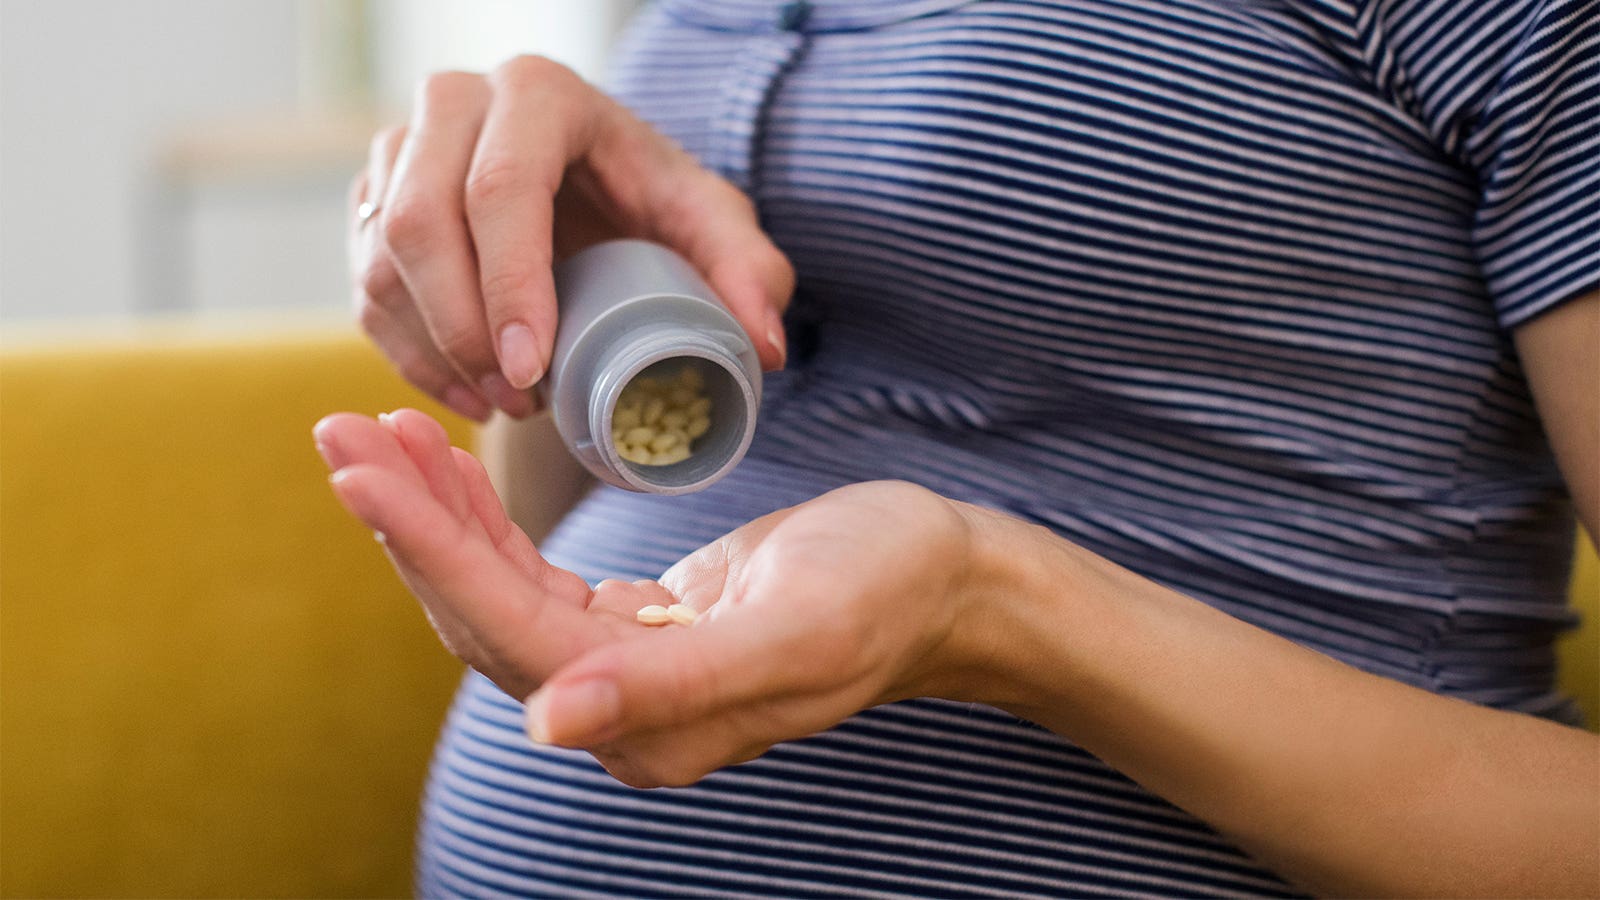 Prenatal Folic Acid Supplements Tied to Lower Risk of Kawasaki Disease in Babies